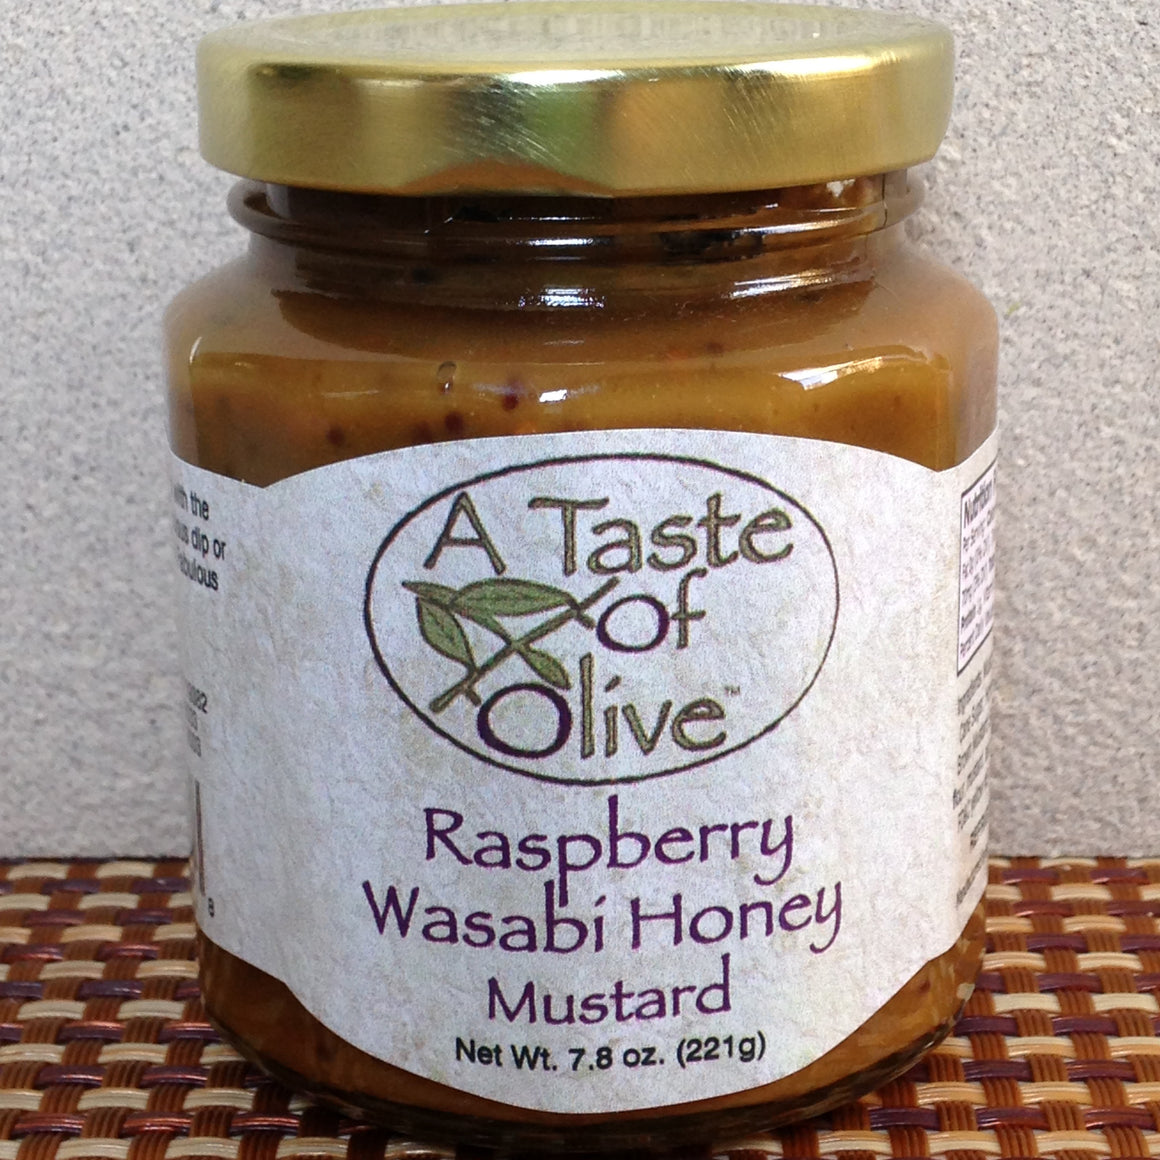 Raspberry Wasabi Honey Mustard - A Taste of Olive